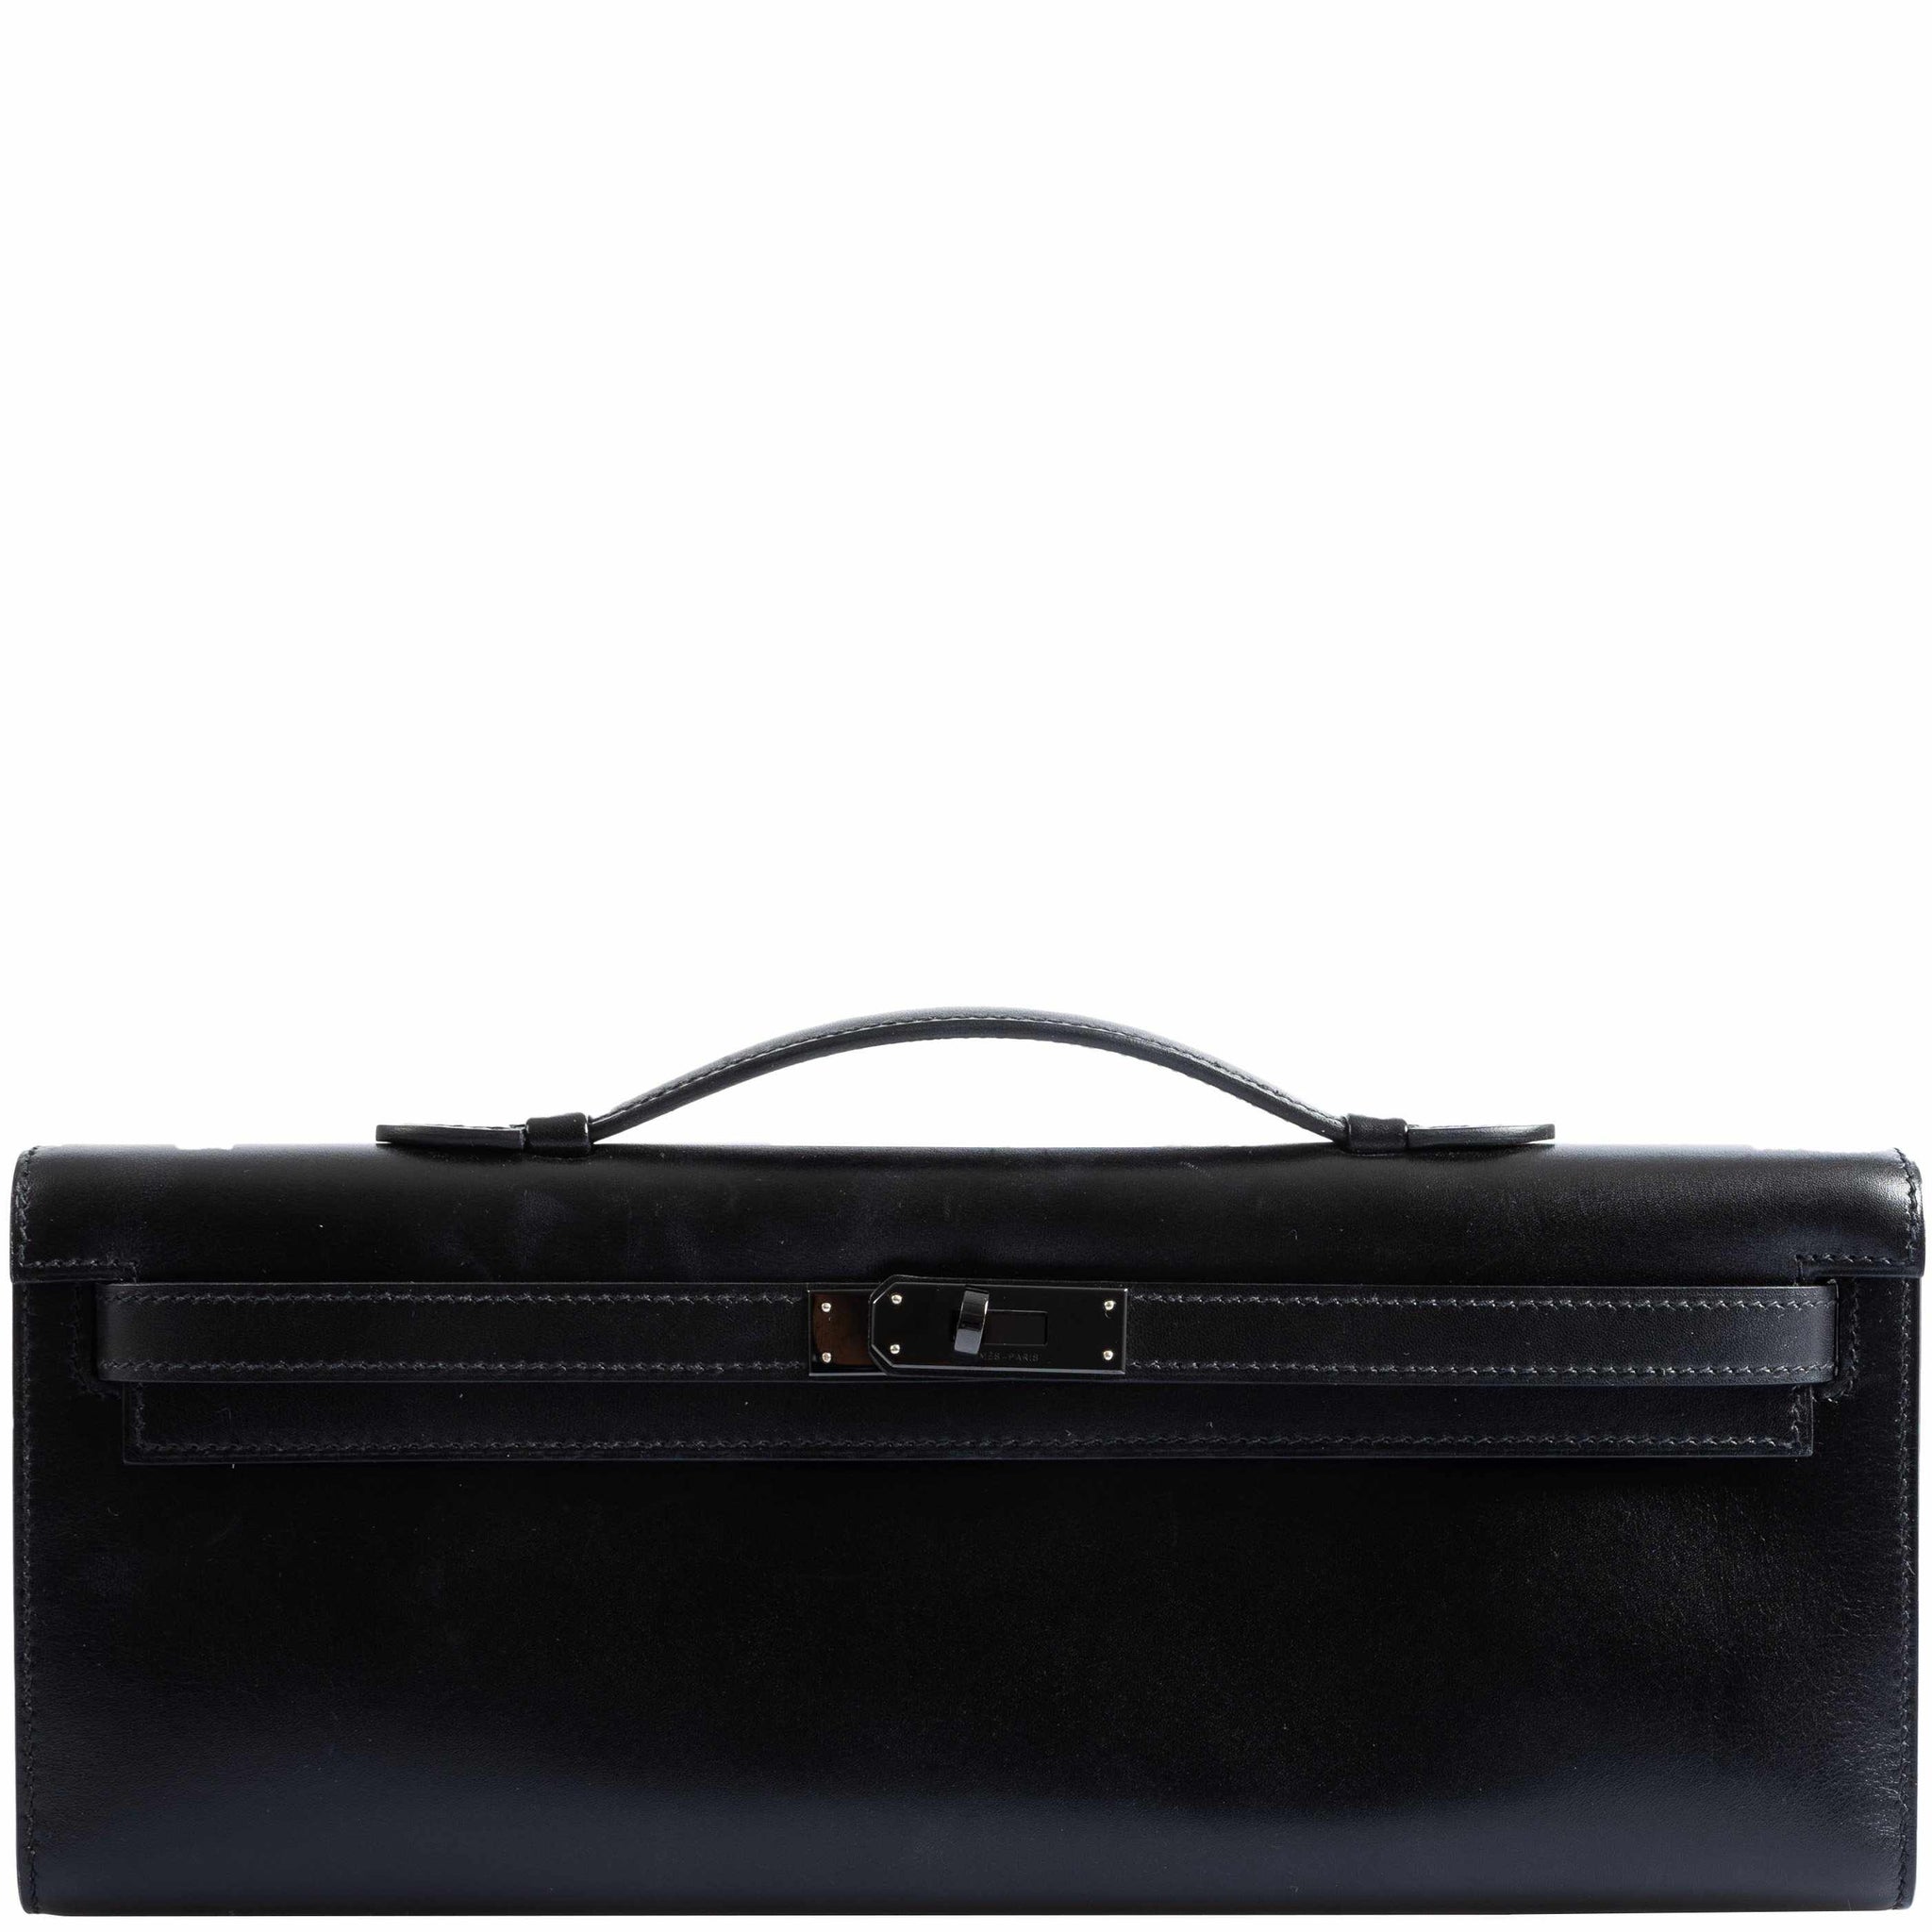 2011 Hermes Black Box Calf Leather Vintage Kelly 32cm Sellier